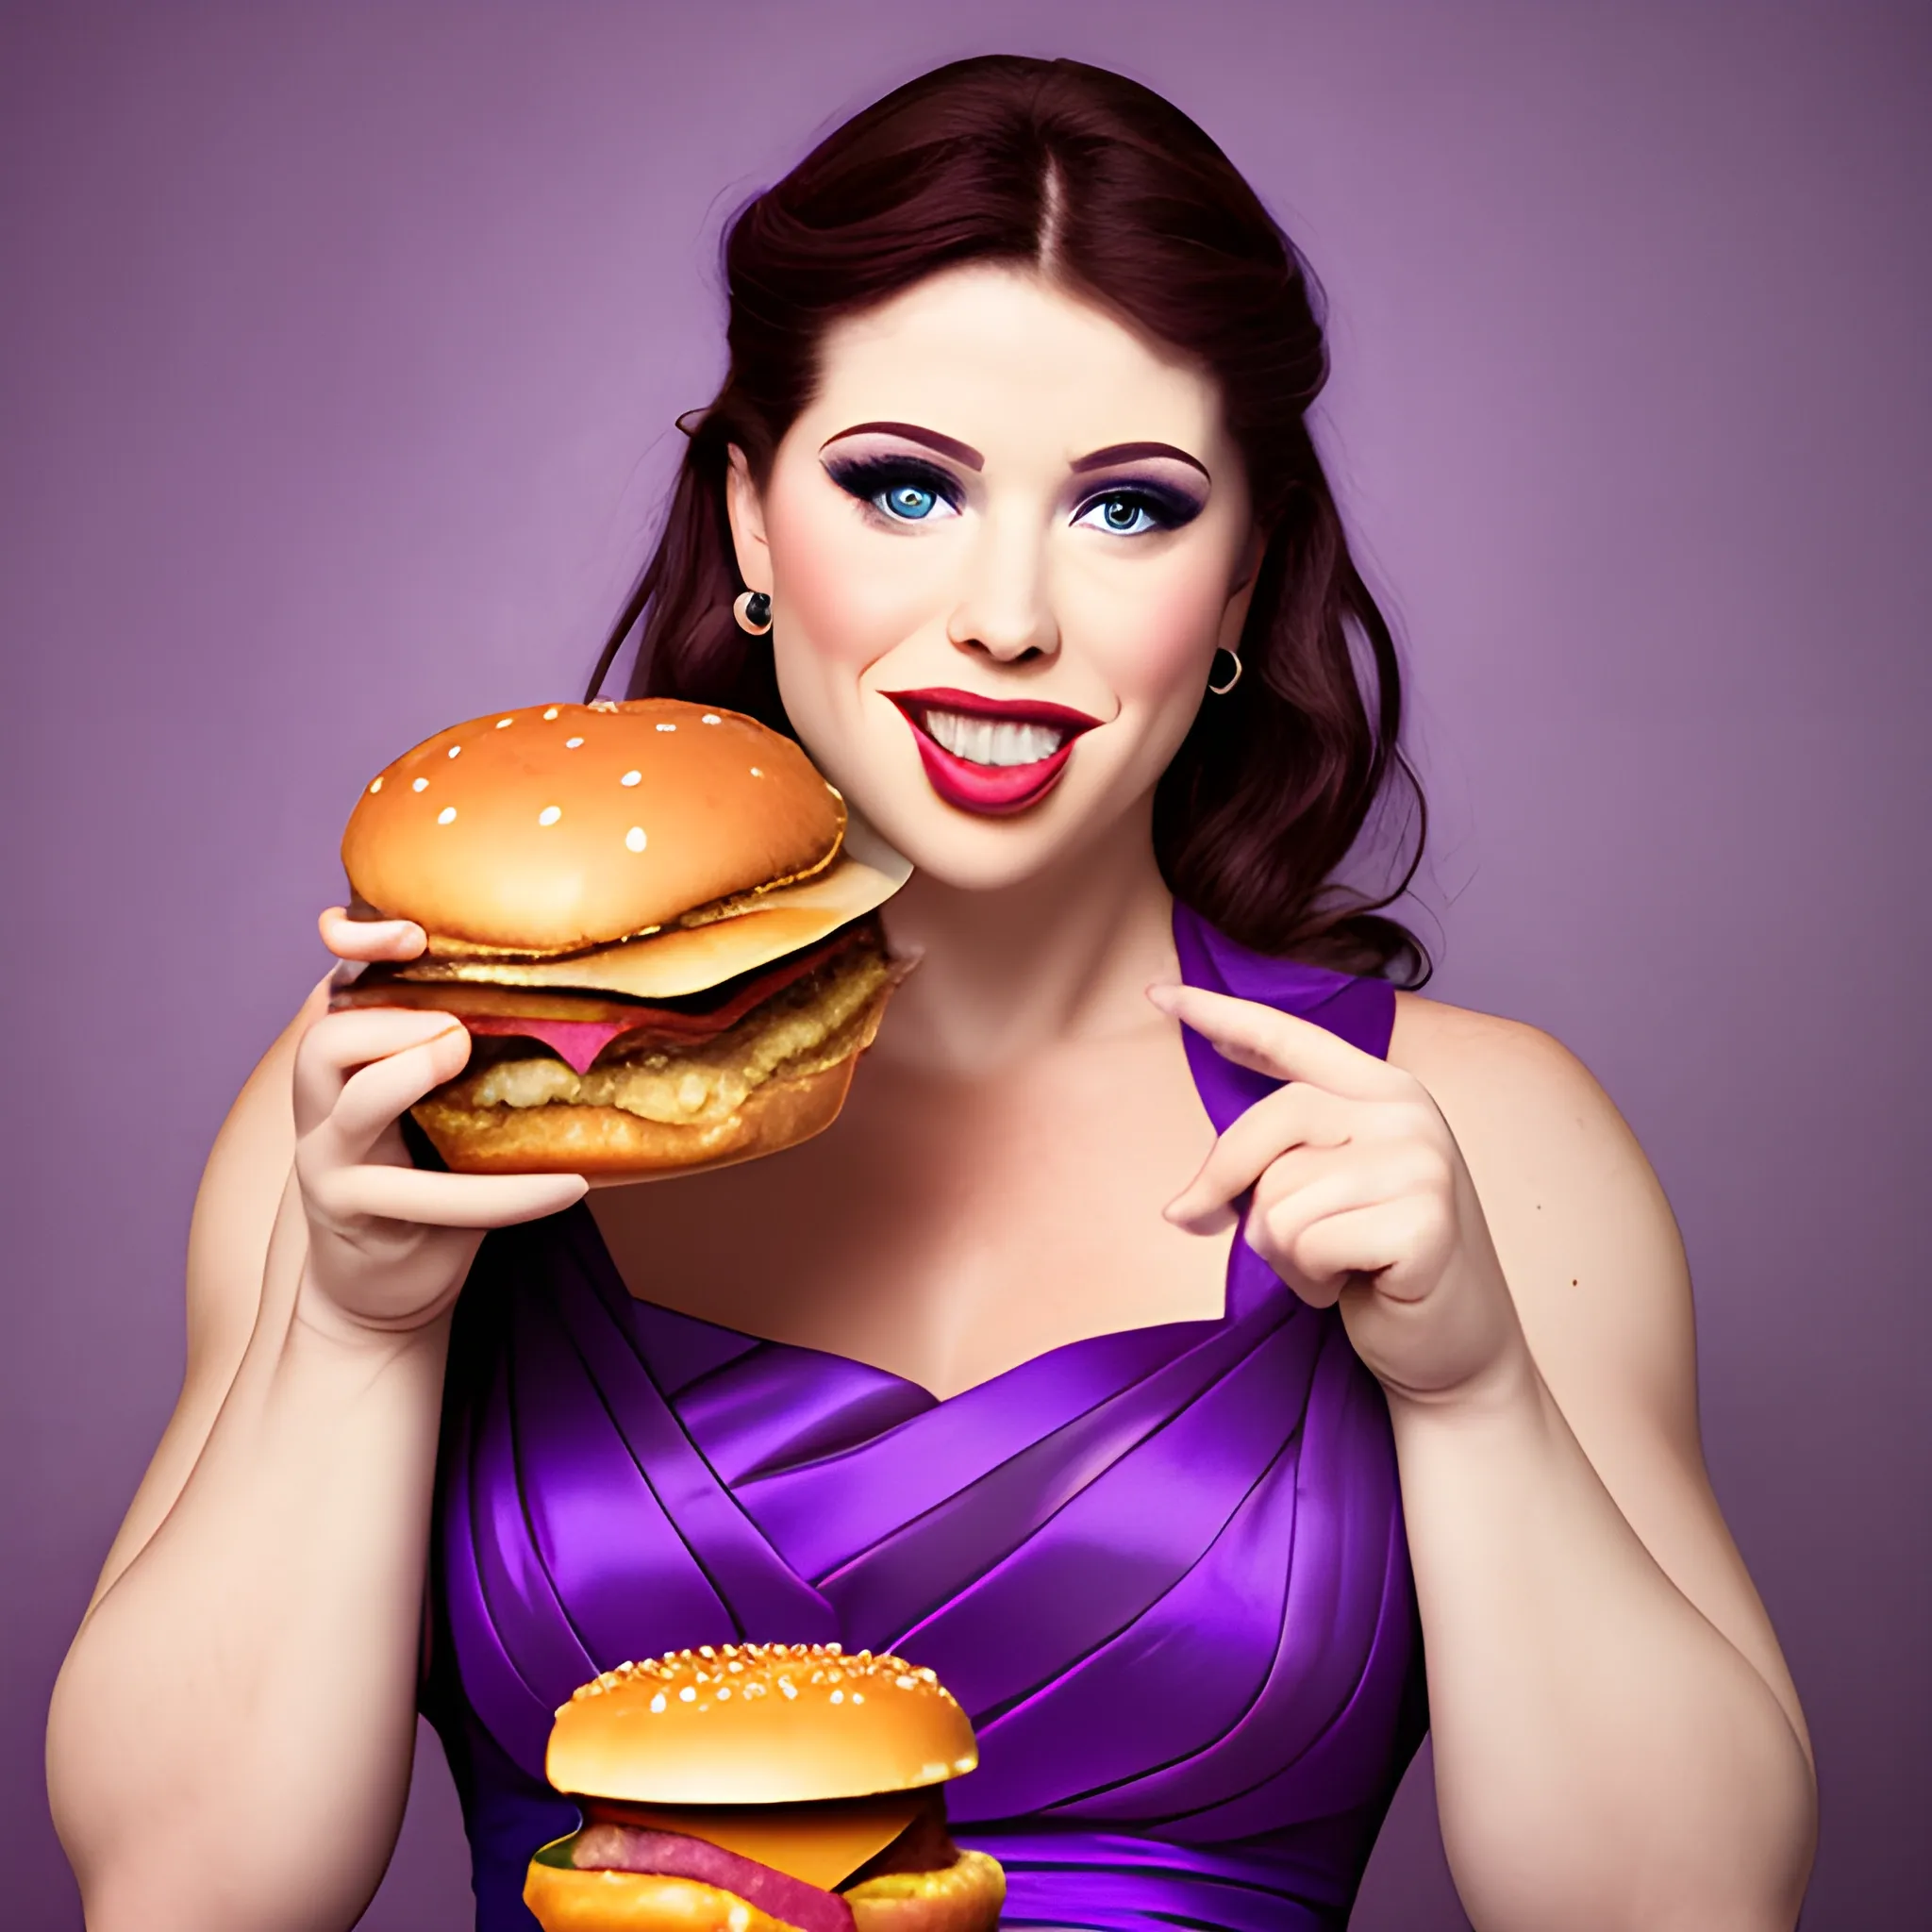 Hercules in a purple dress eats a hamburger, photography